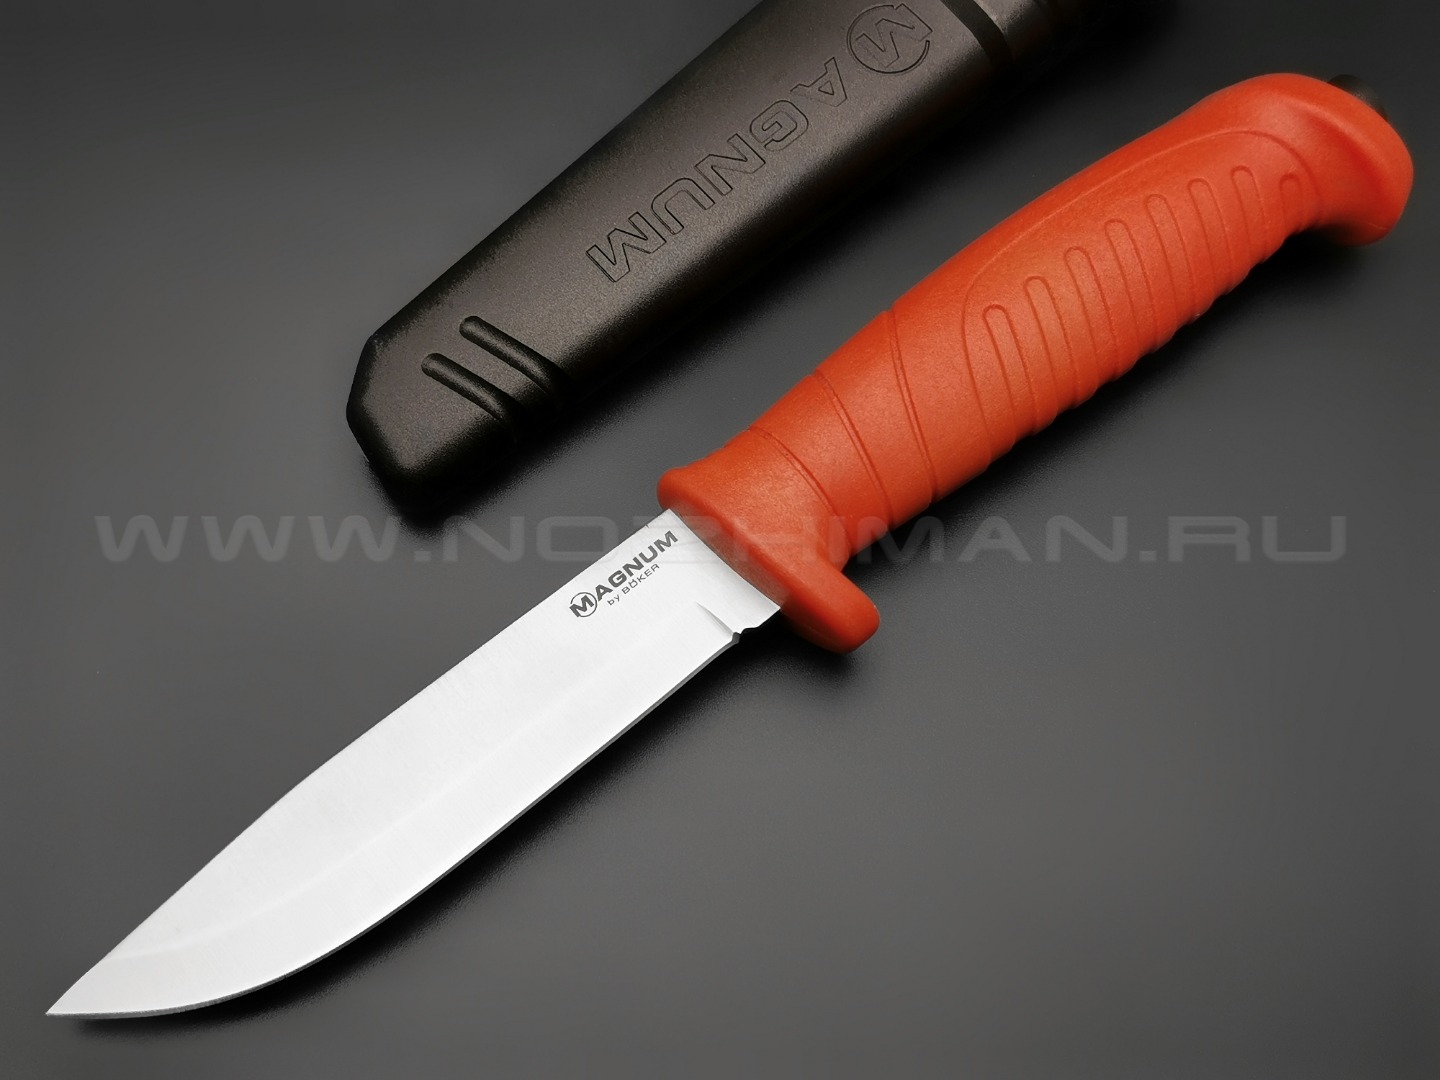 Magnum нож 02MB011 Knivgar Sar Orange сталь 420A, рукоять Plastic